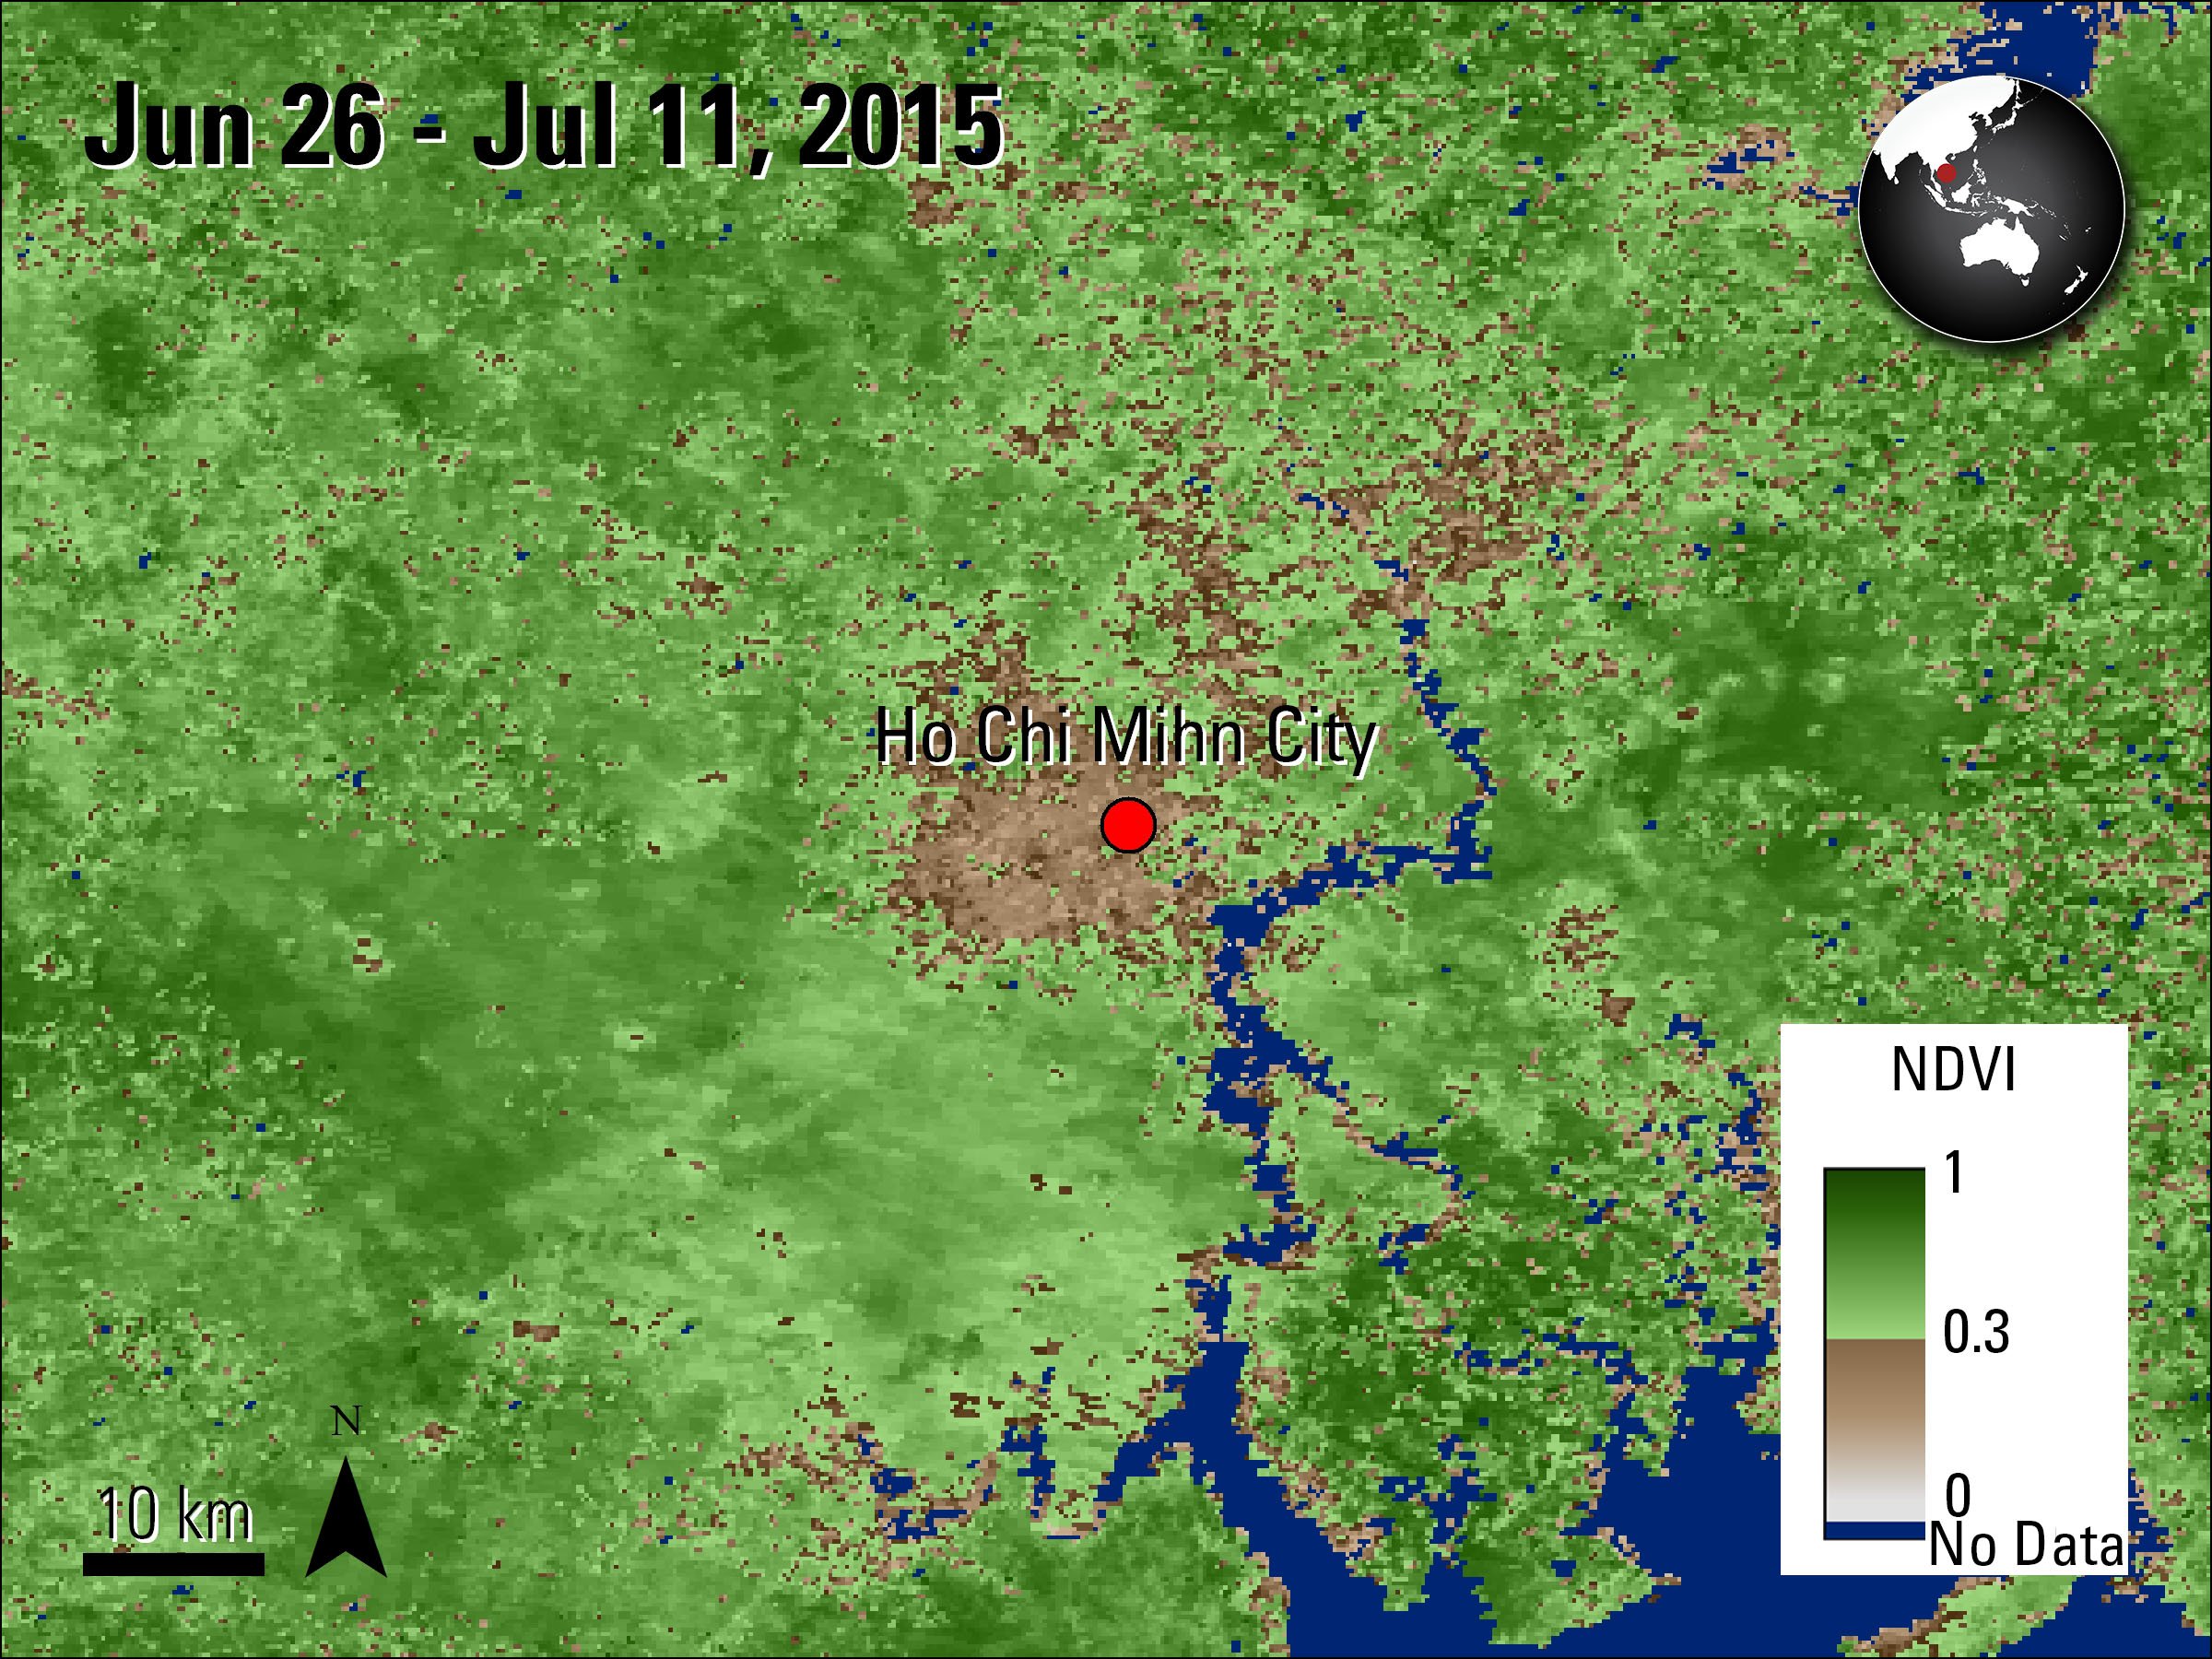 Terra MODIS NDVI data (MOD13Q1) over Vietnam, acquired between Jun 26 and July 15, 2013.